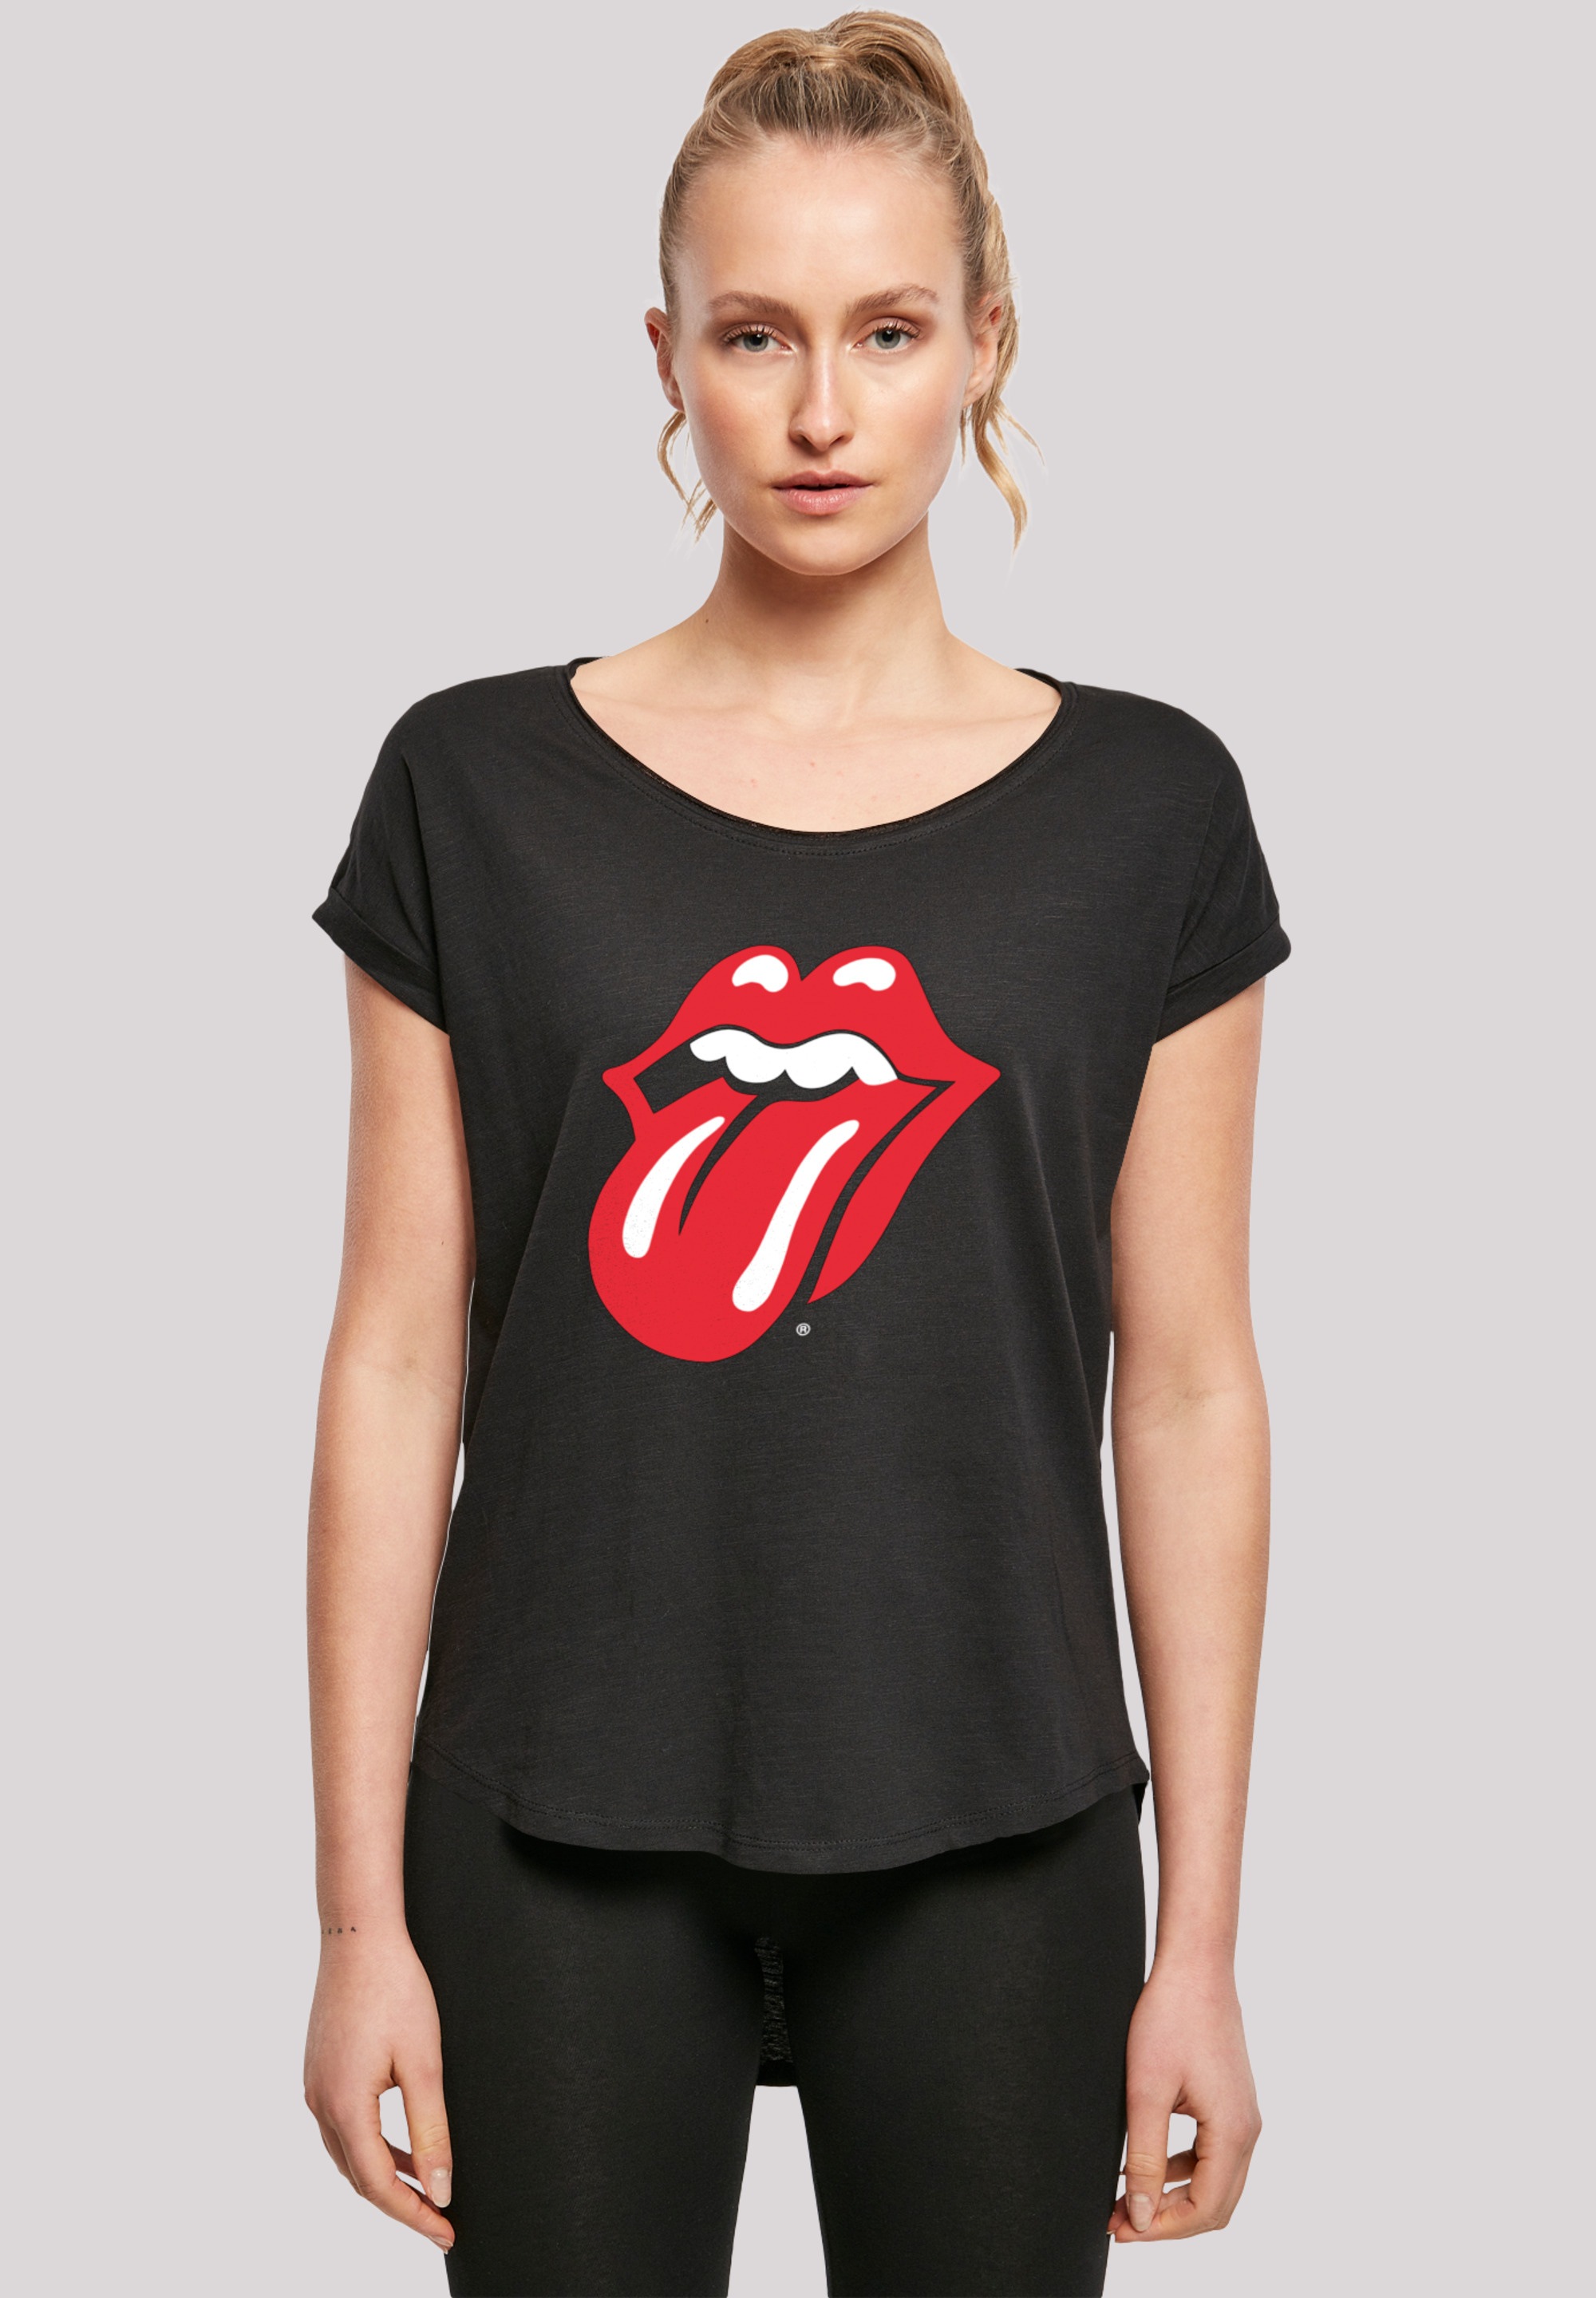 F4NT4STIC Marškinėliai »The Rolling Stones Sijon...